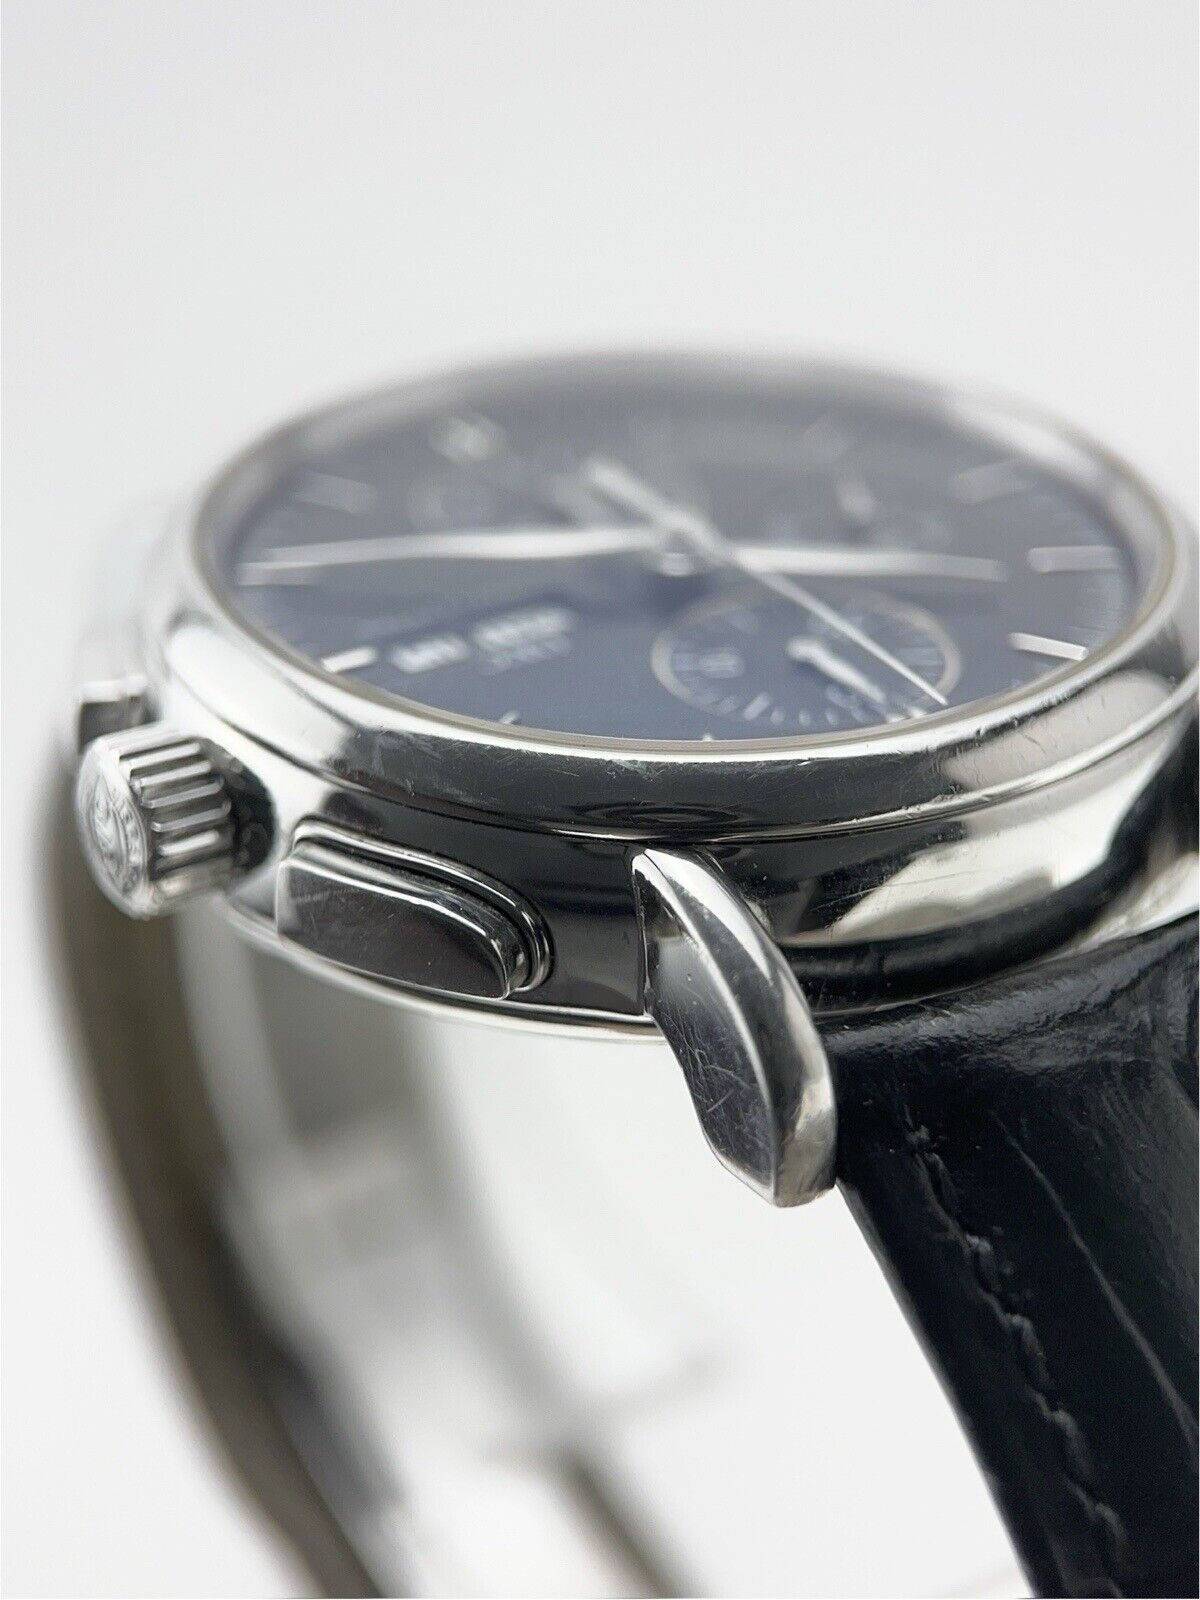 IWC Portofino Chronograph Steel Black 41mm Automatic Men’s Watch IW378303